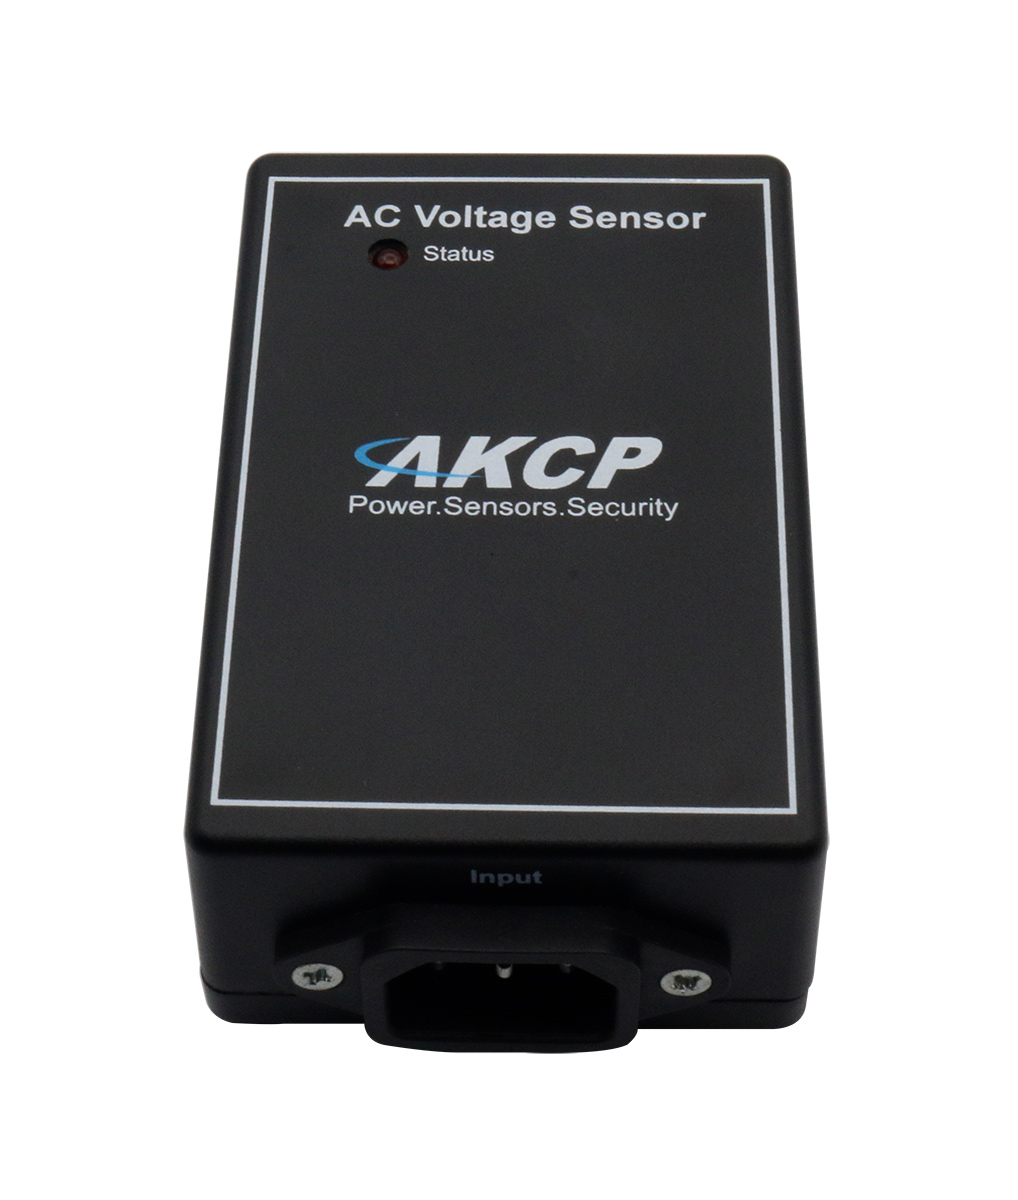 AKCP - ACV40 - AC Voltage Sensor